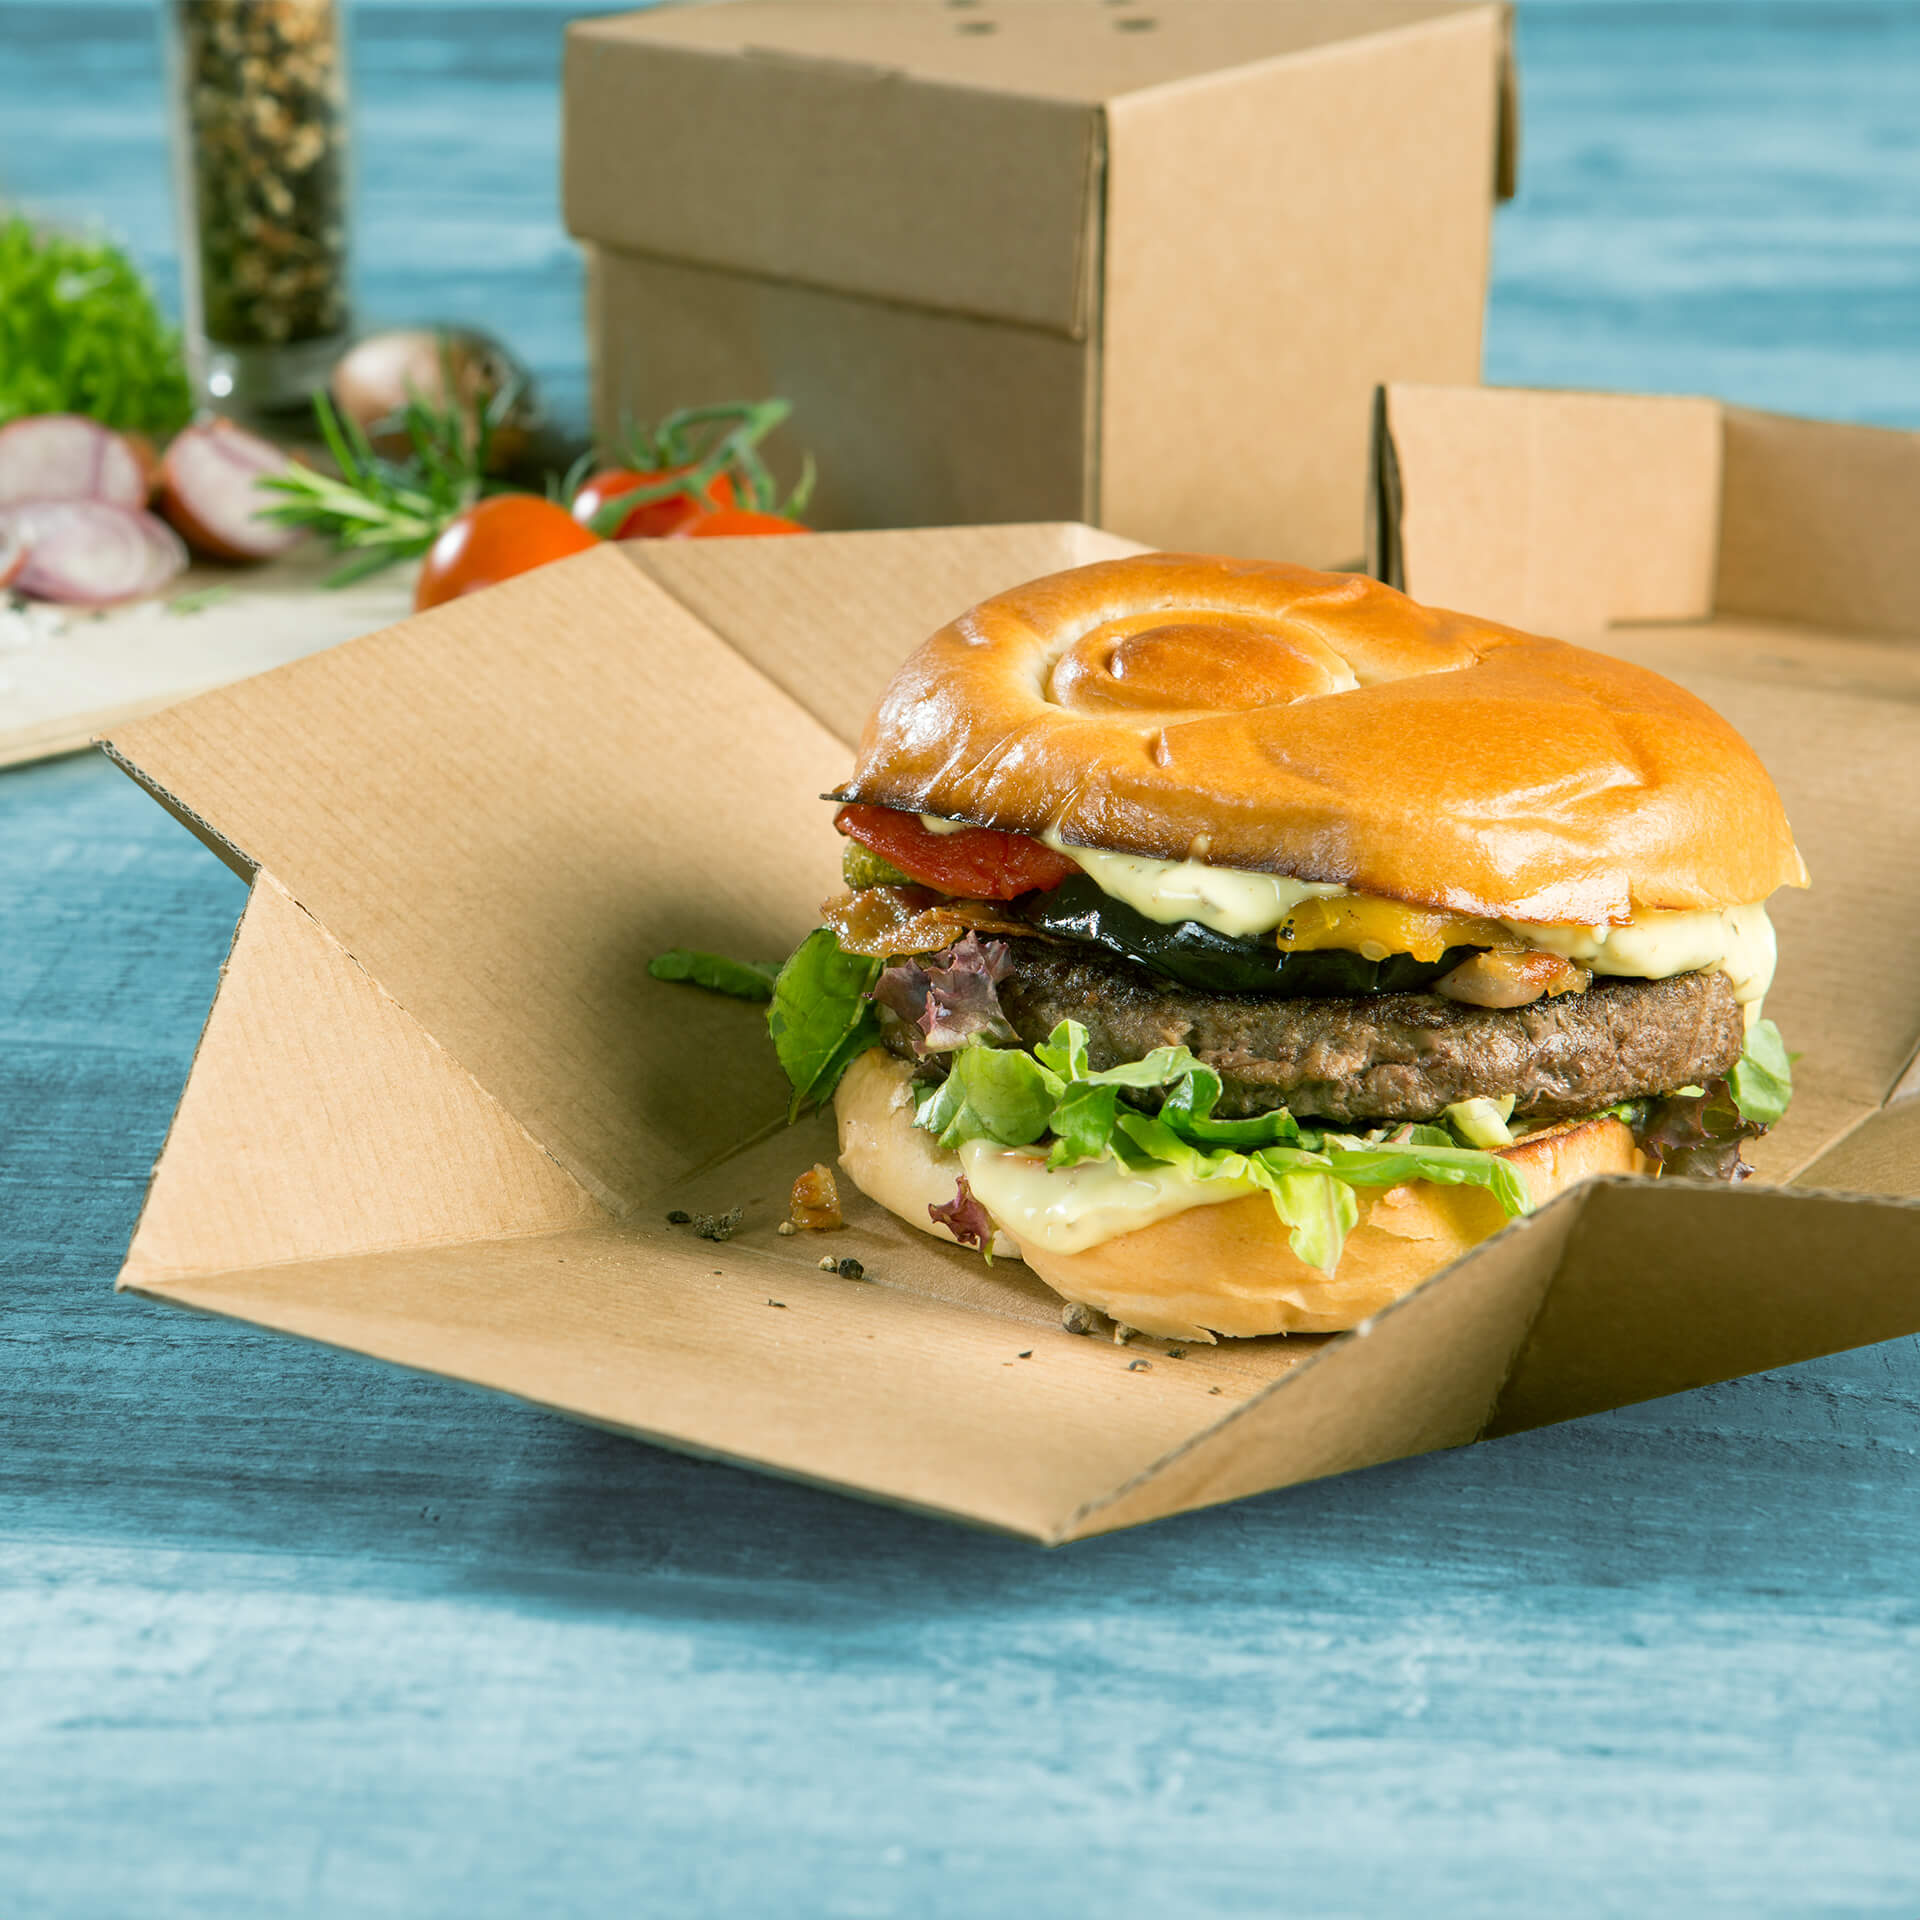 Burgerboxen 13 x 13 x 10 cm, Kraftkarton, braun, faltbar